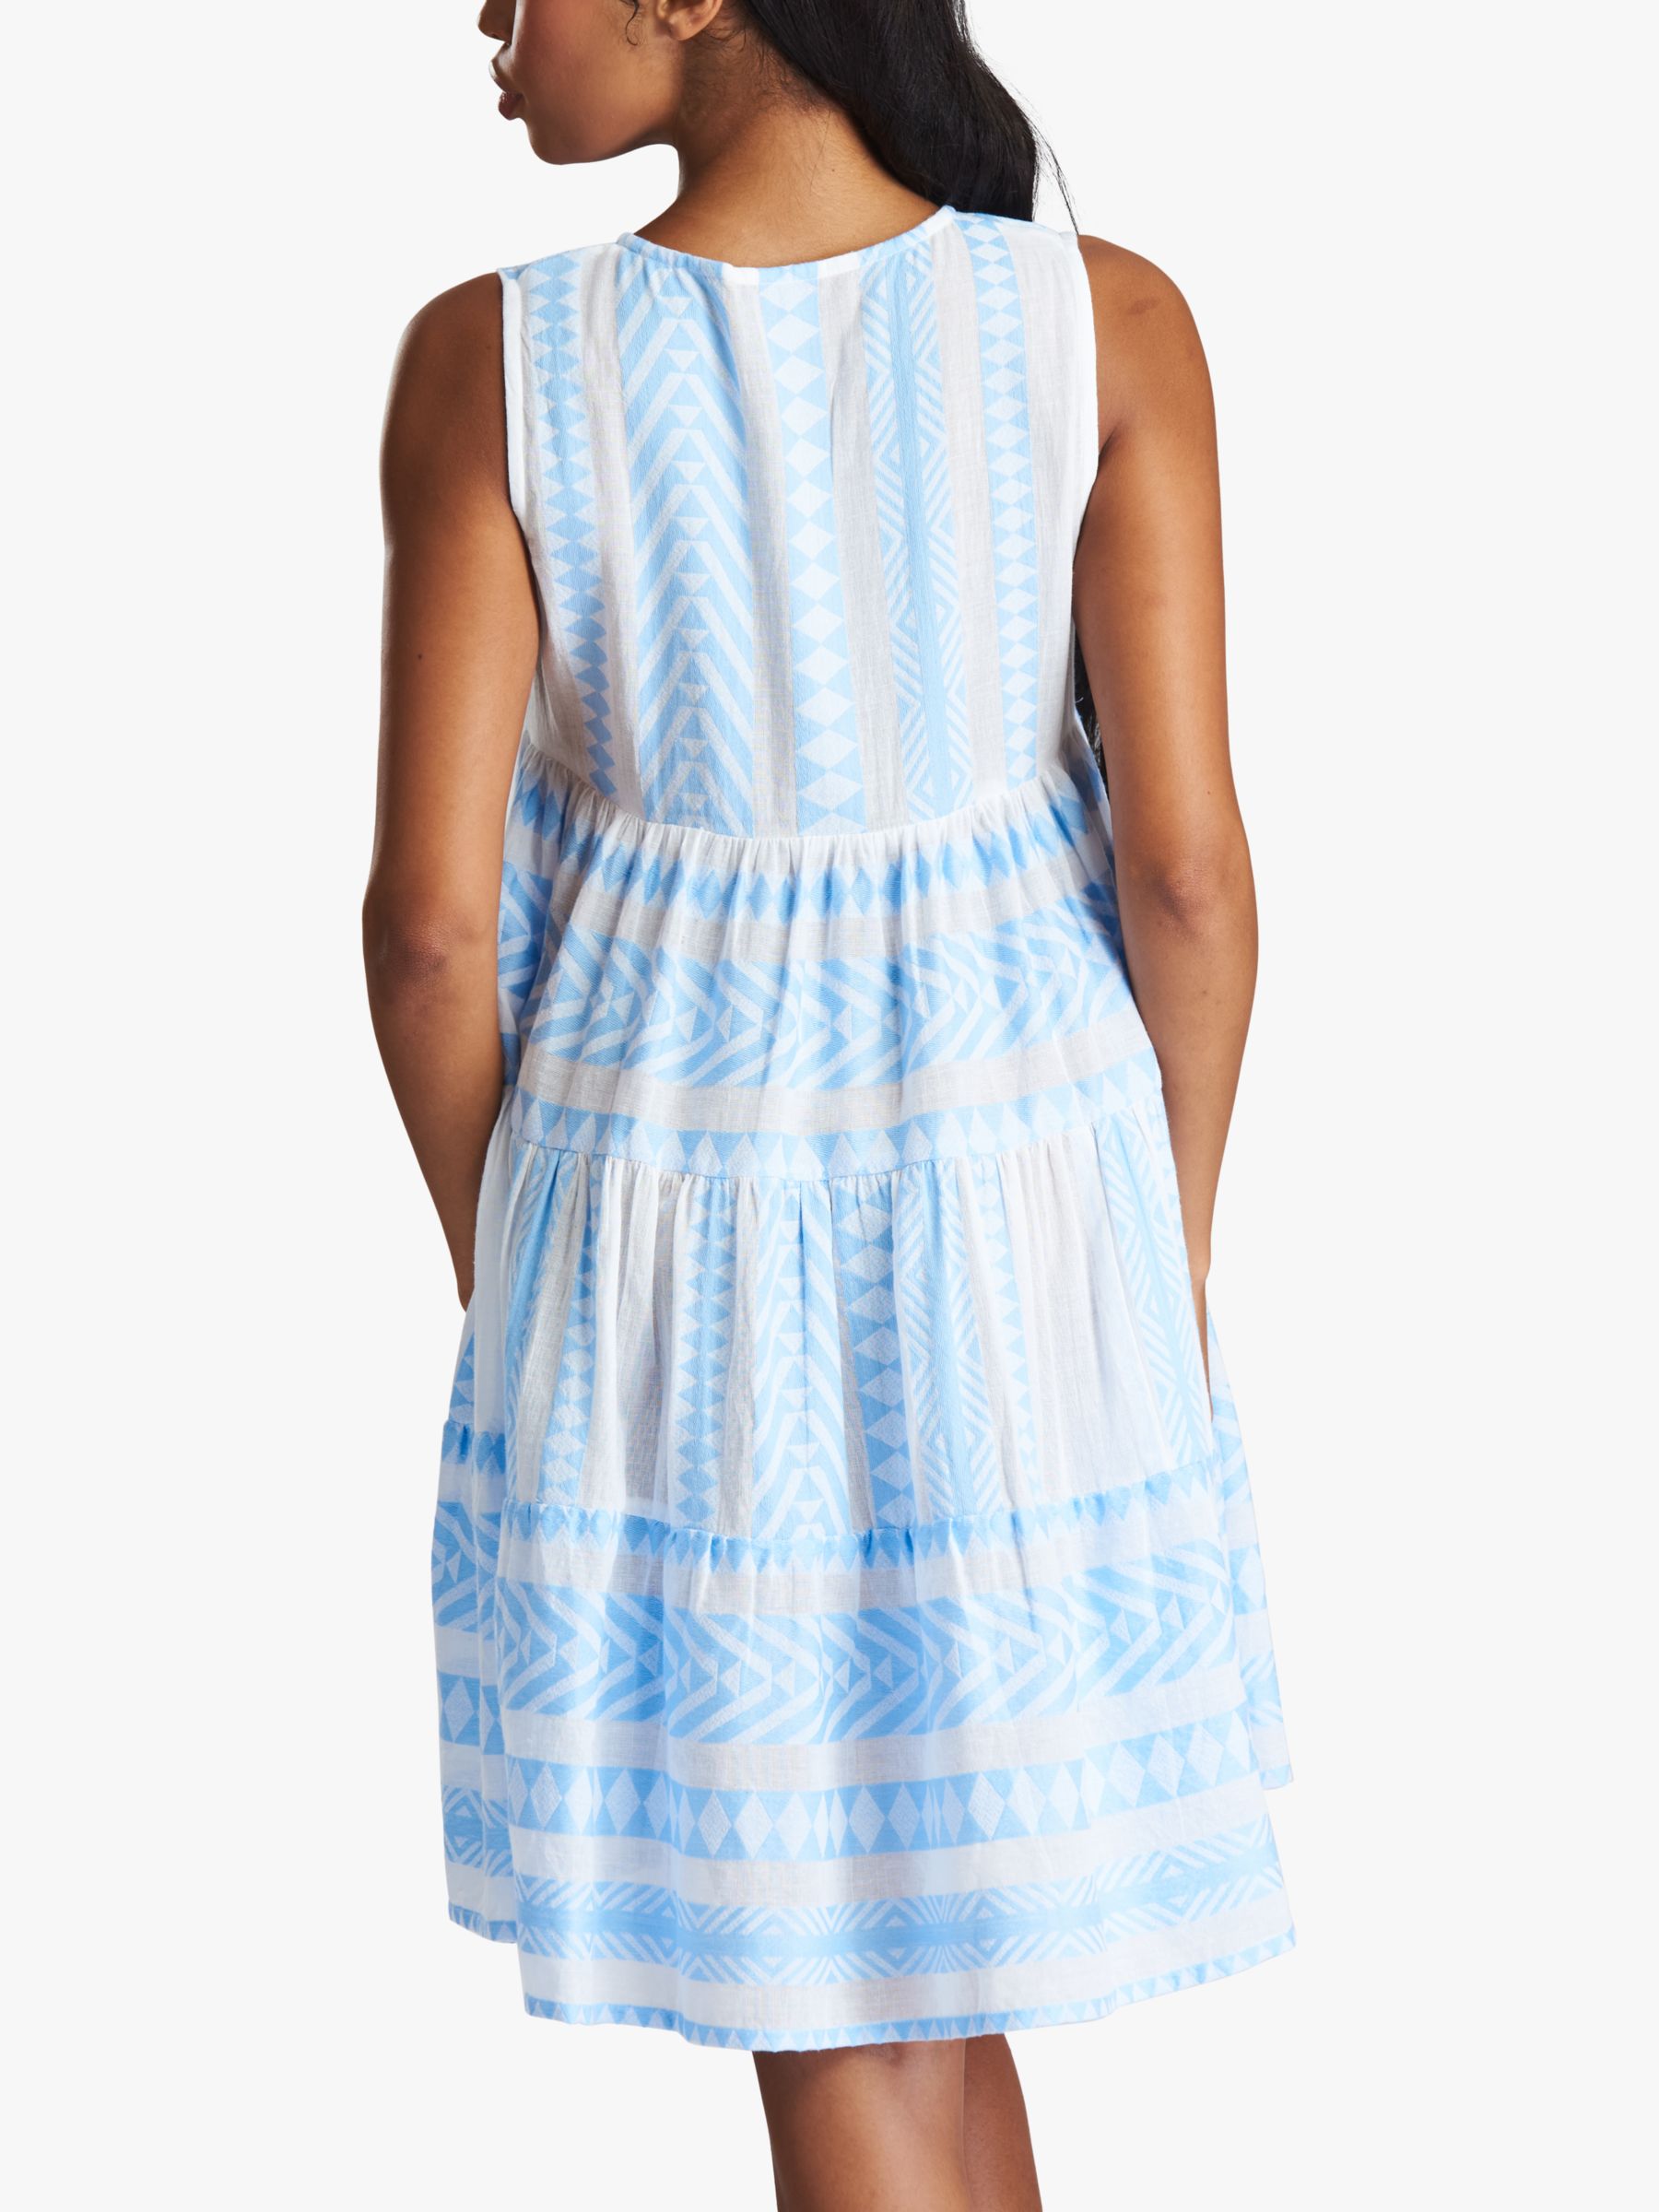 South Beach Jacquard Sleeveless Tiered Mini Dress, Blue Sky/White, 8